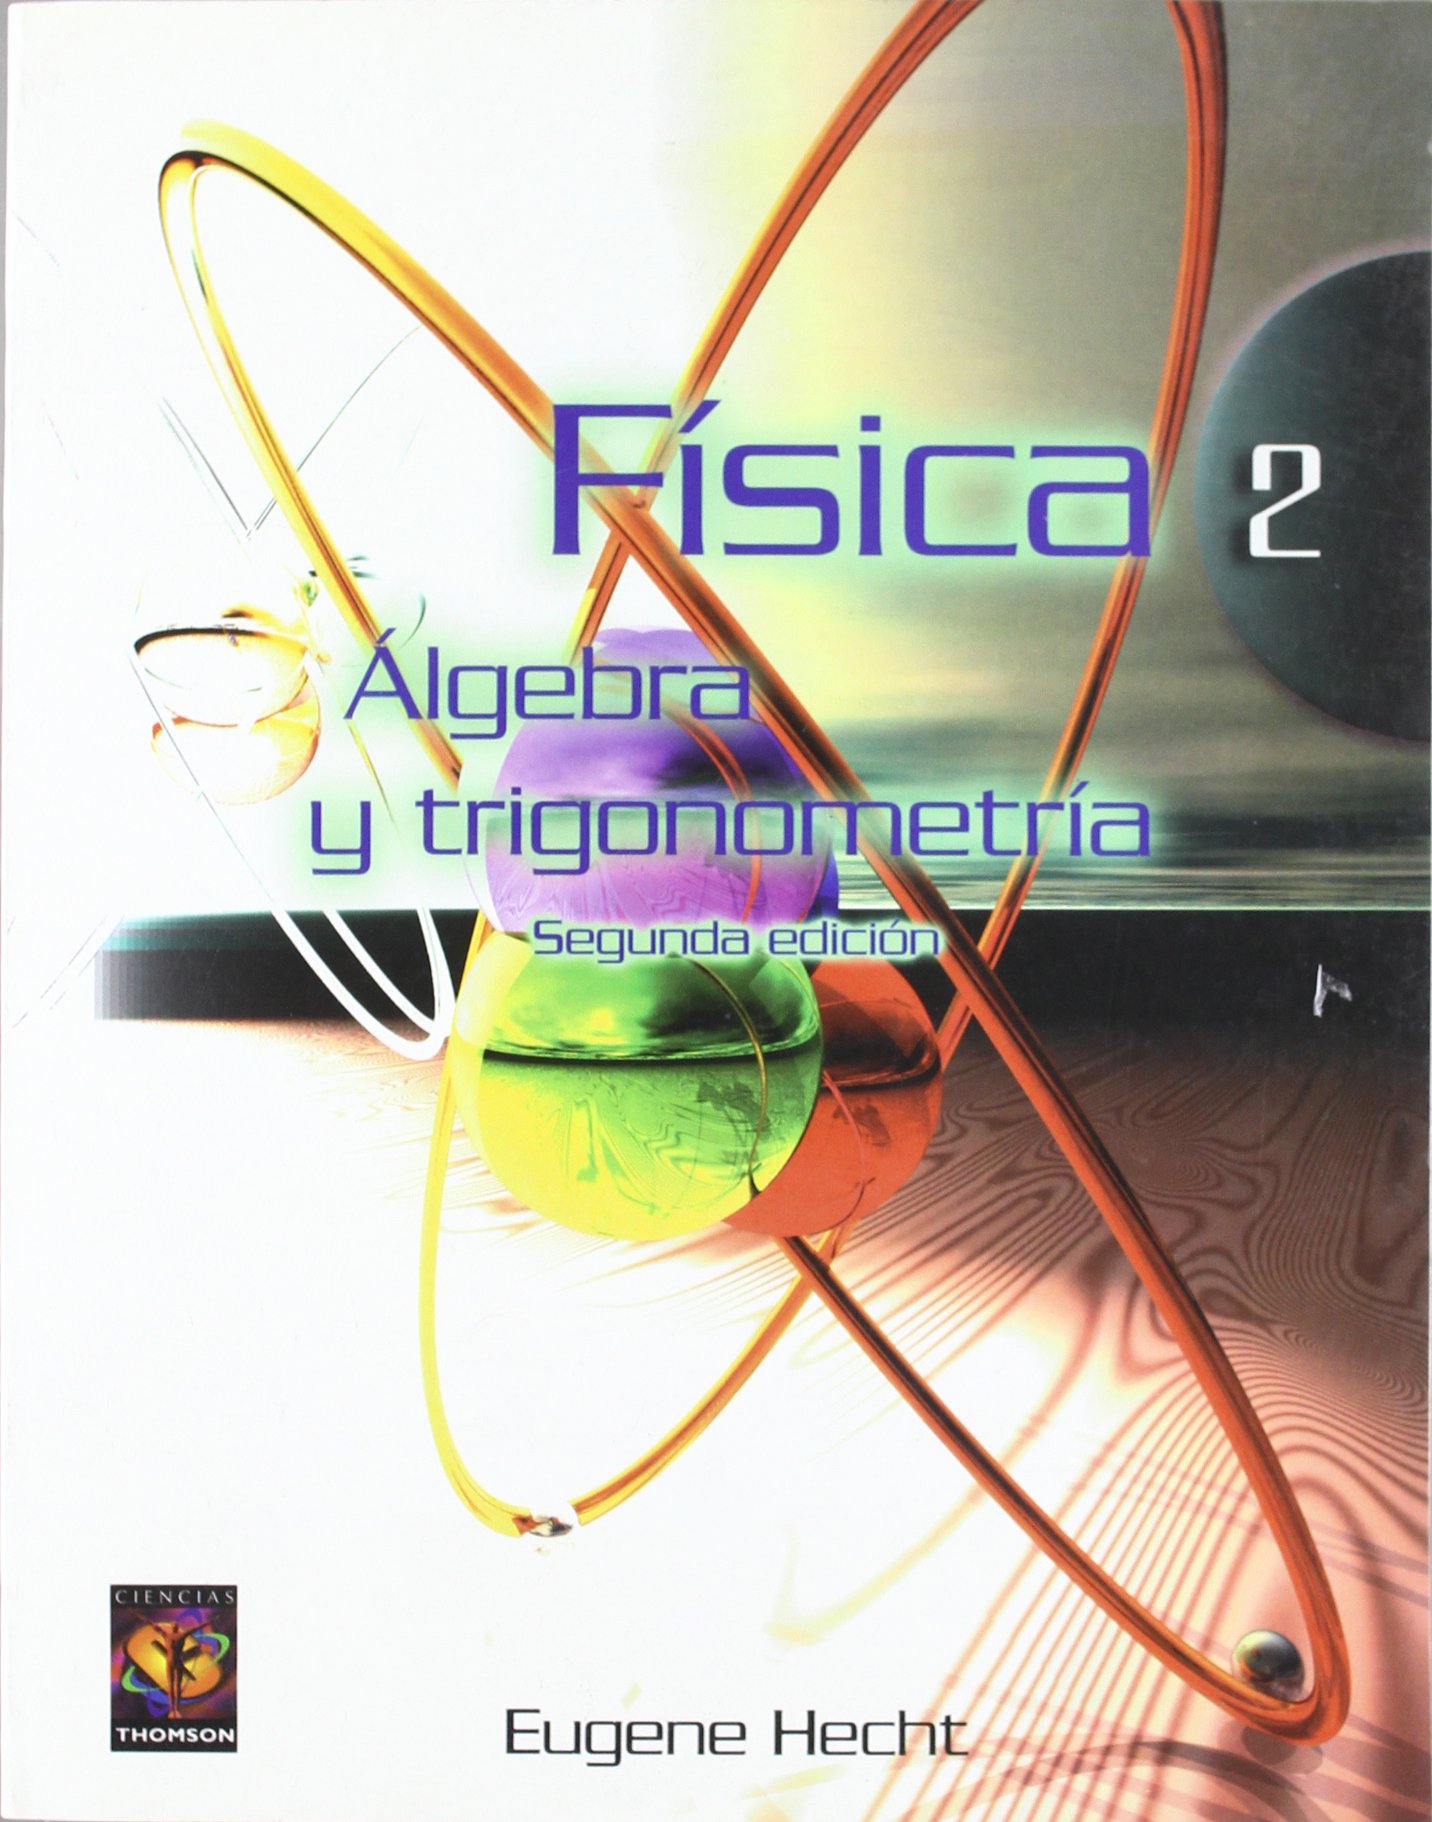 Libro: Física 2 - Álgebra y Trigonometría Segunda Edición por Eugene Hecht